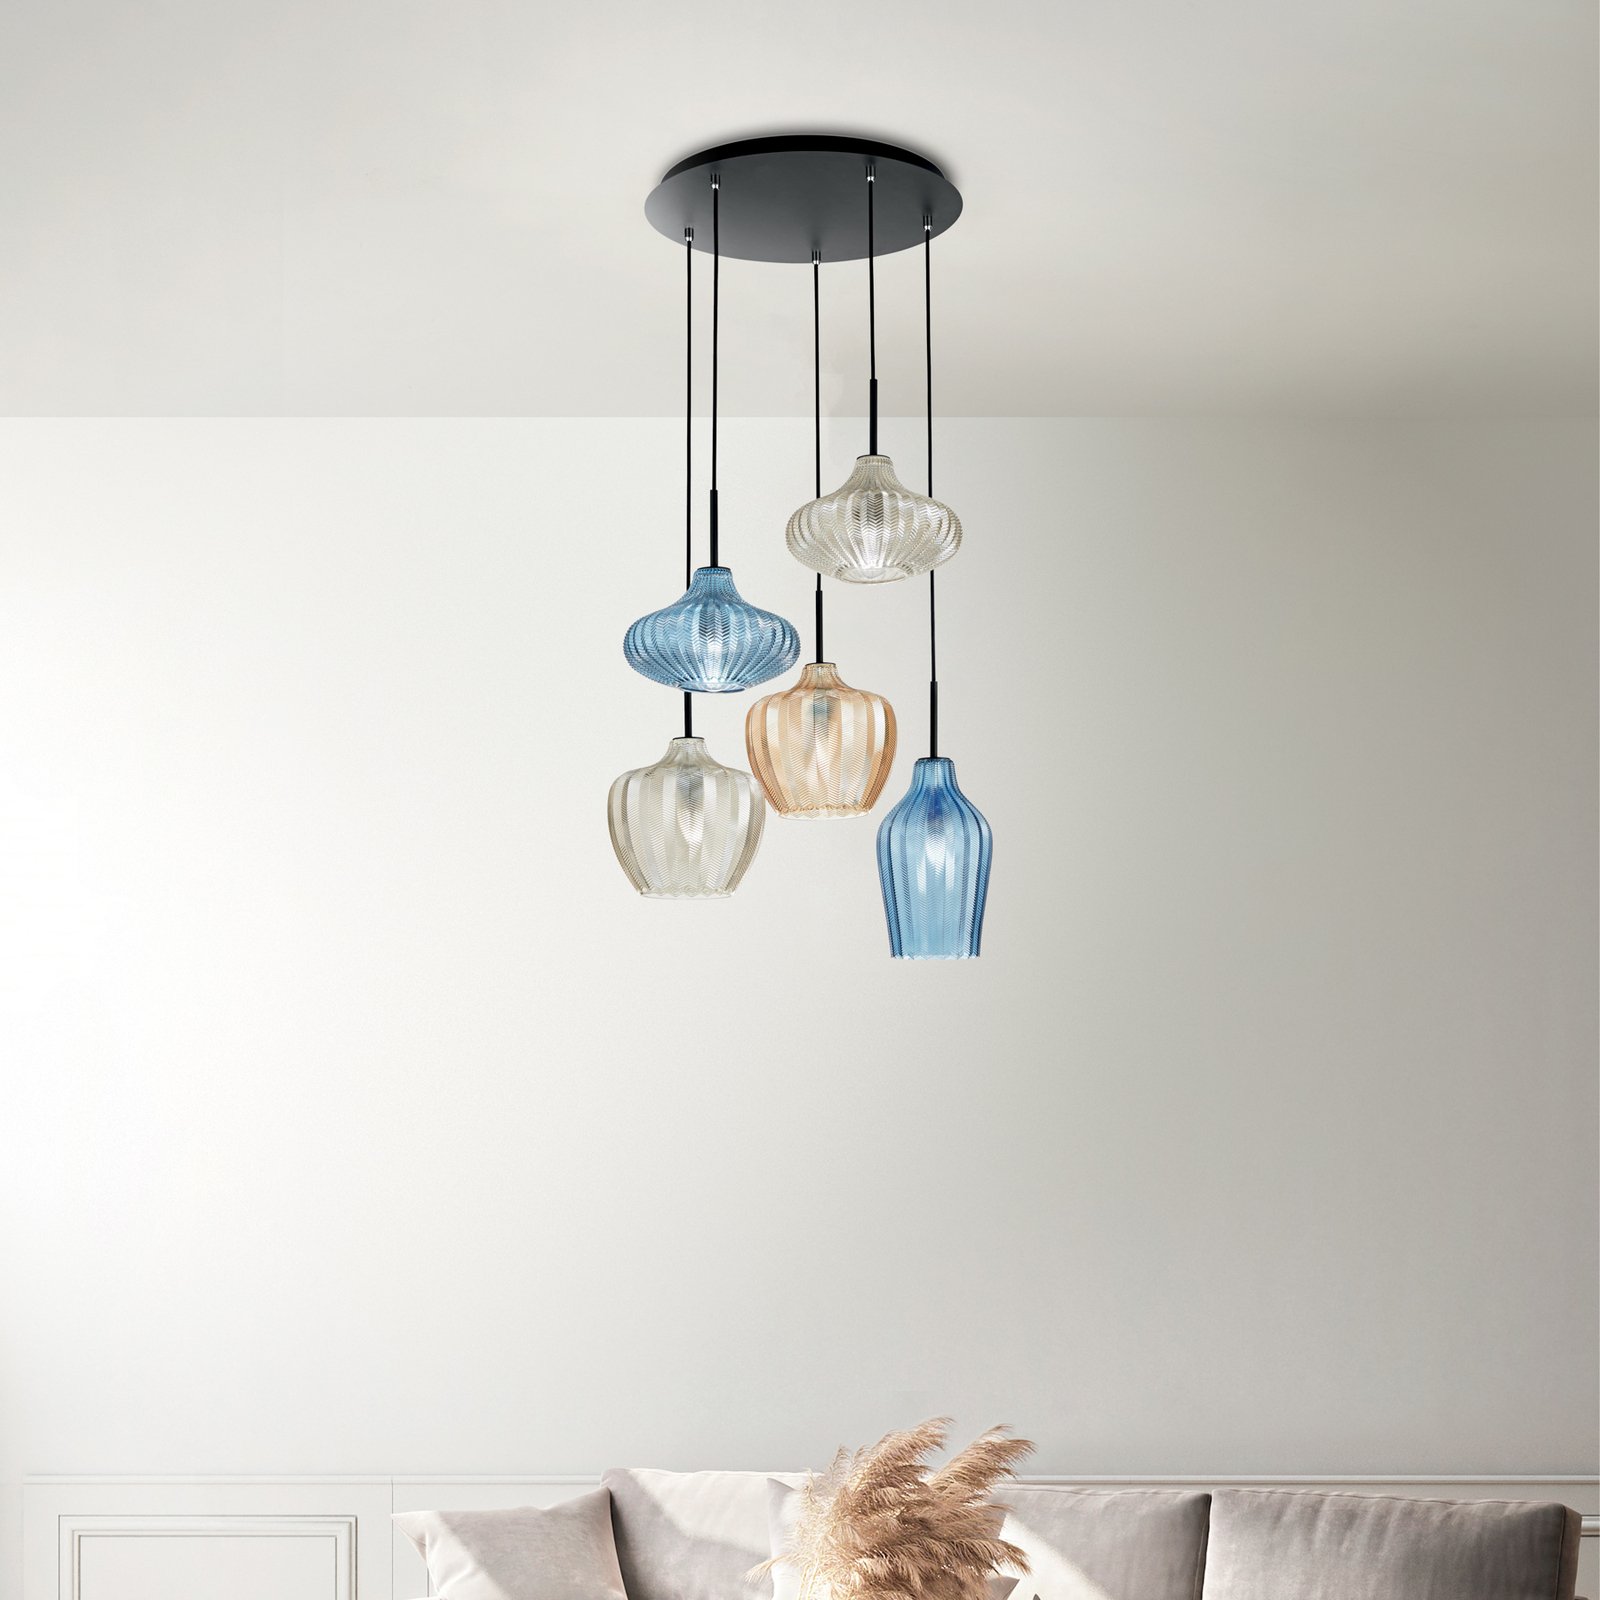 Olbia hanging light, Ø 50 cm, 5-bulb, amber/blue/beige, glass